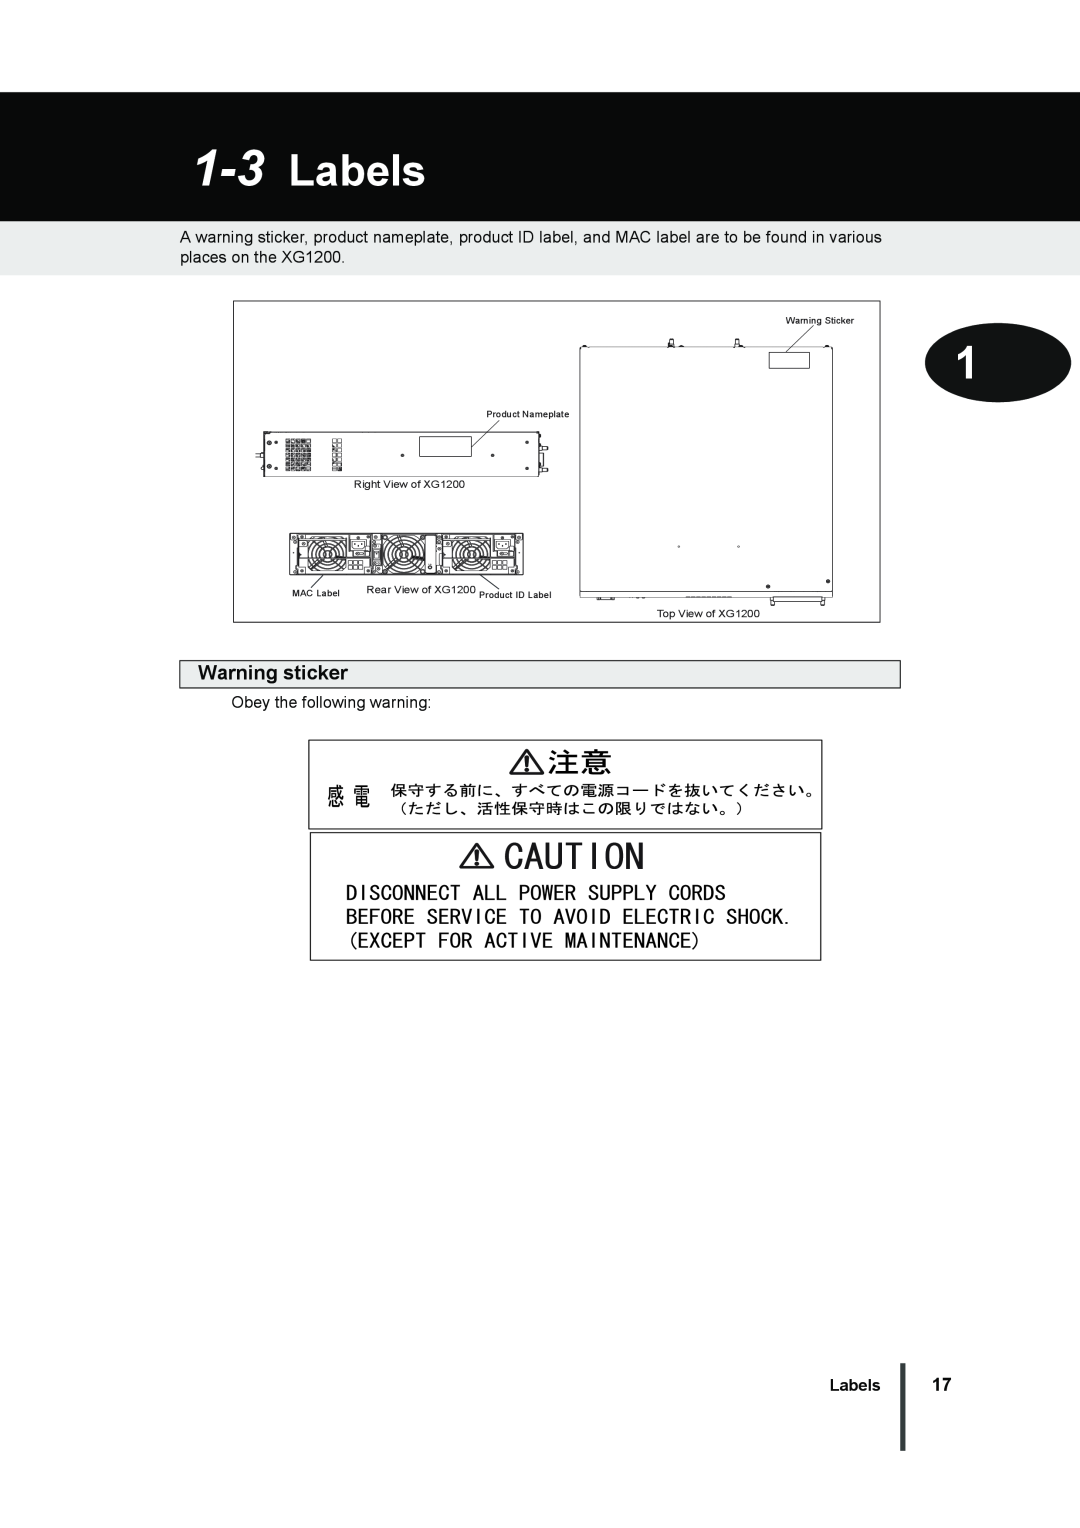 Fujitsu XG1200 manual Labels, Warning sticker, Warning Sticker, Product Nameplate, MAC Label 